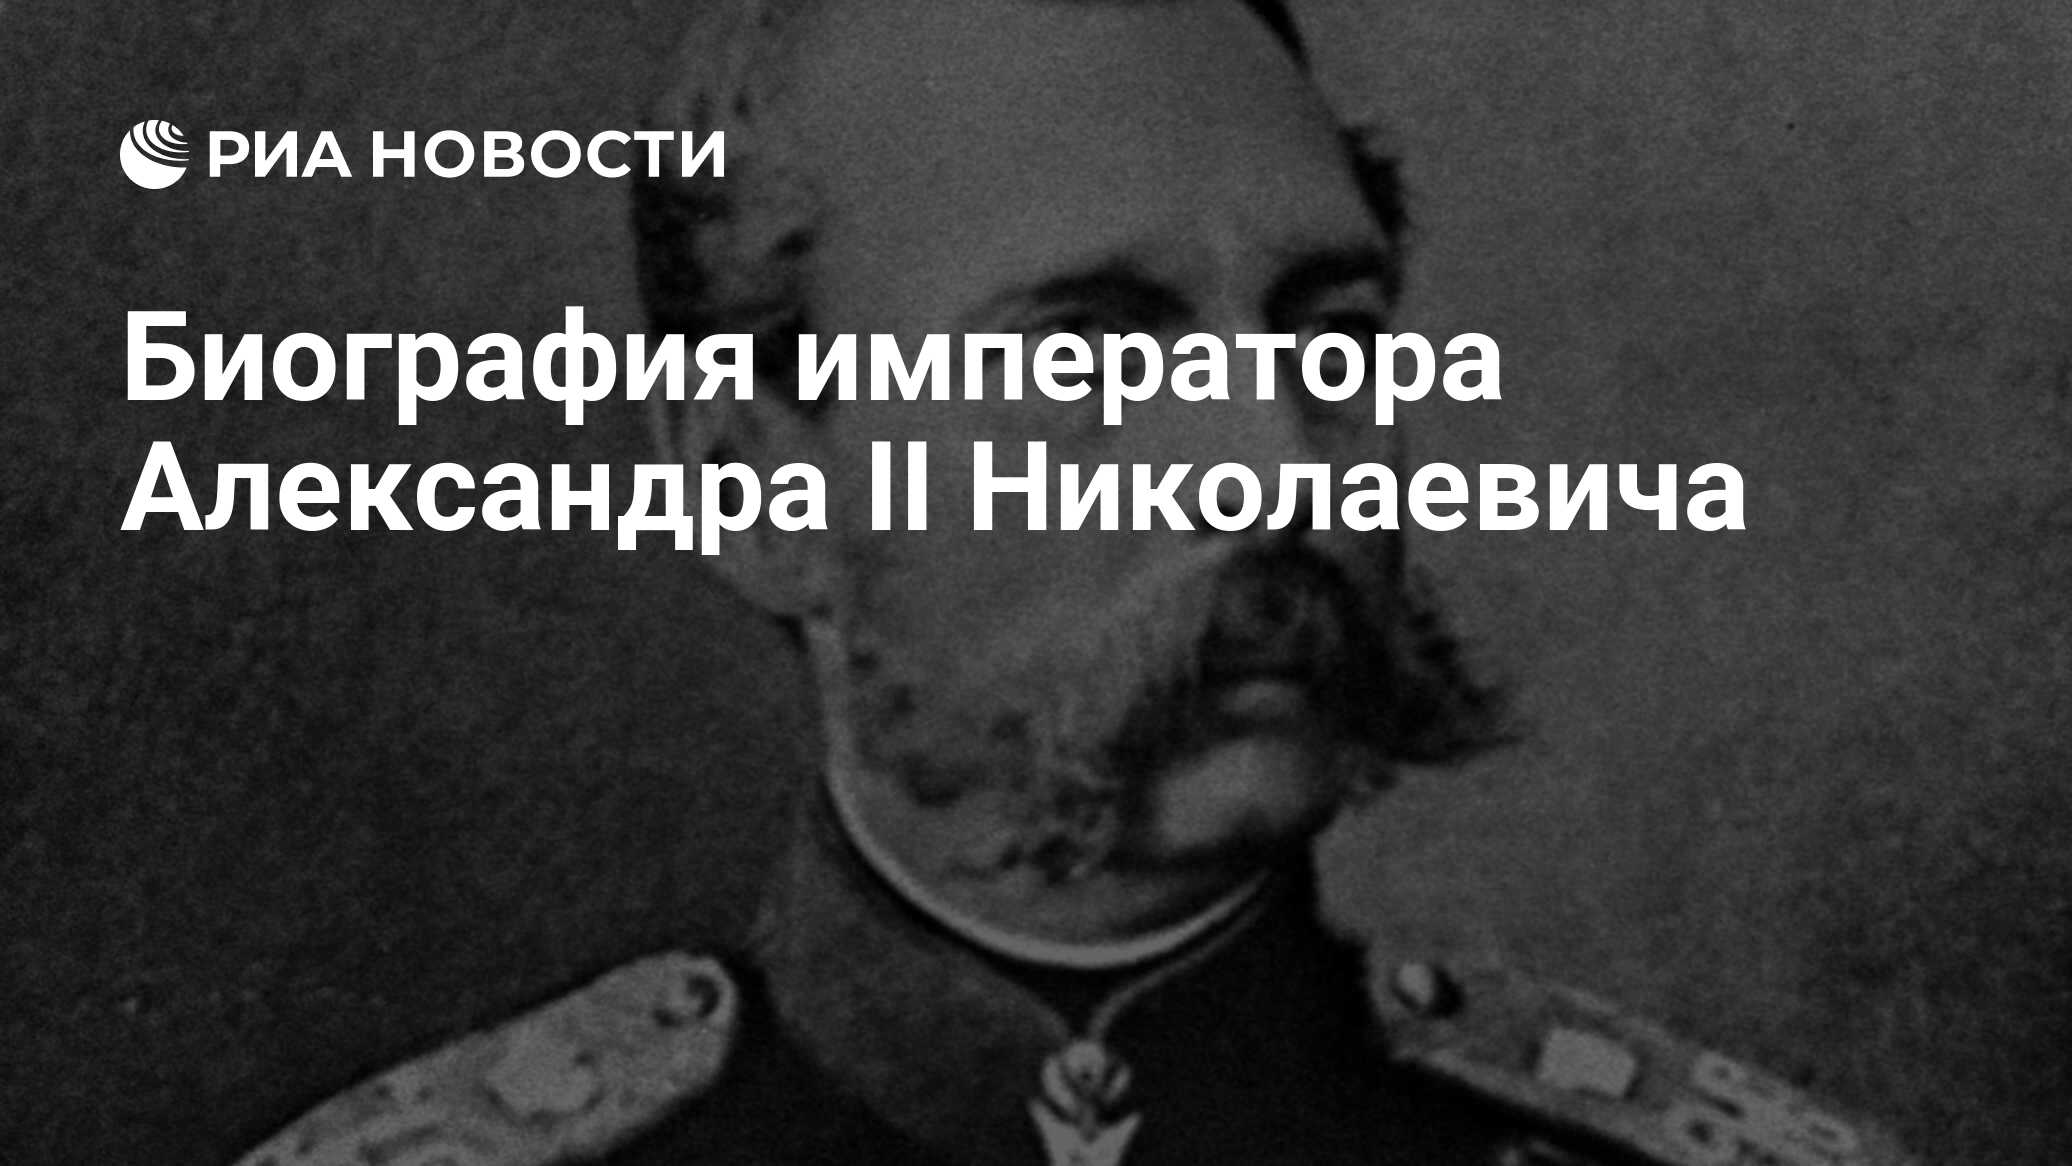 Биография императора Александра II Николаевича - РИА Новости, 01.03.2020